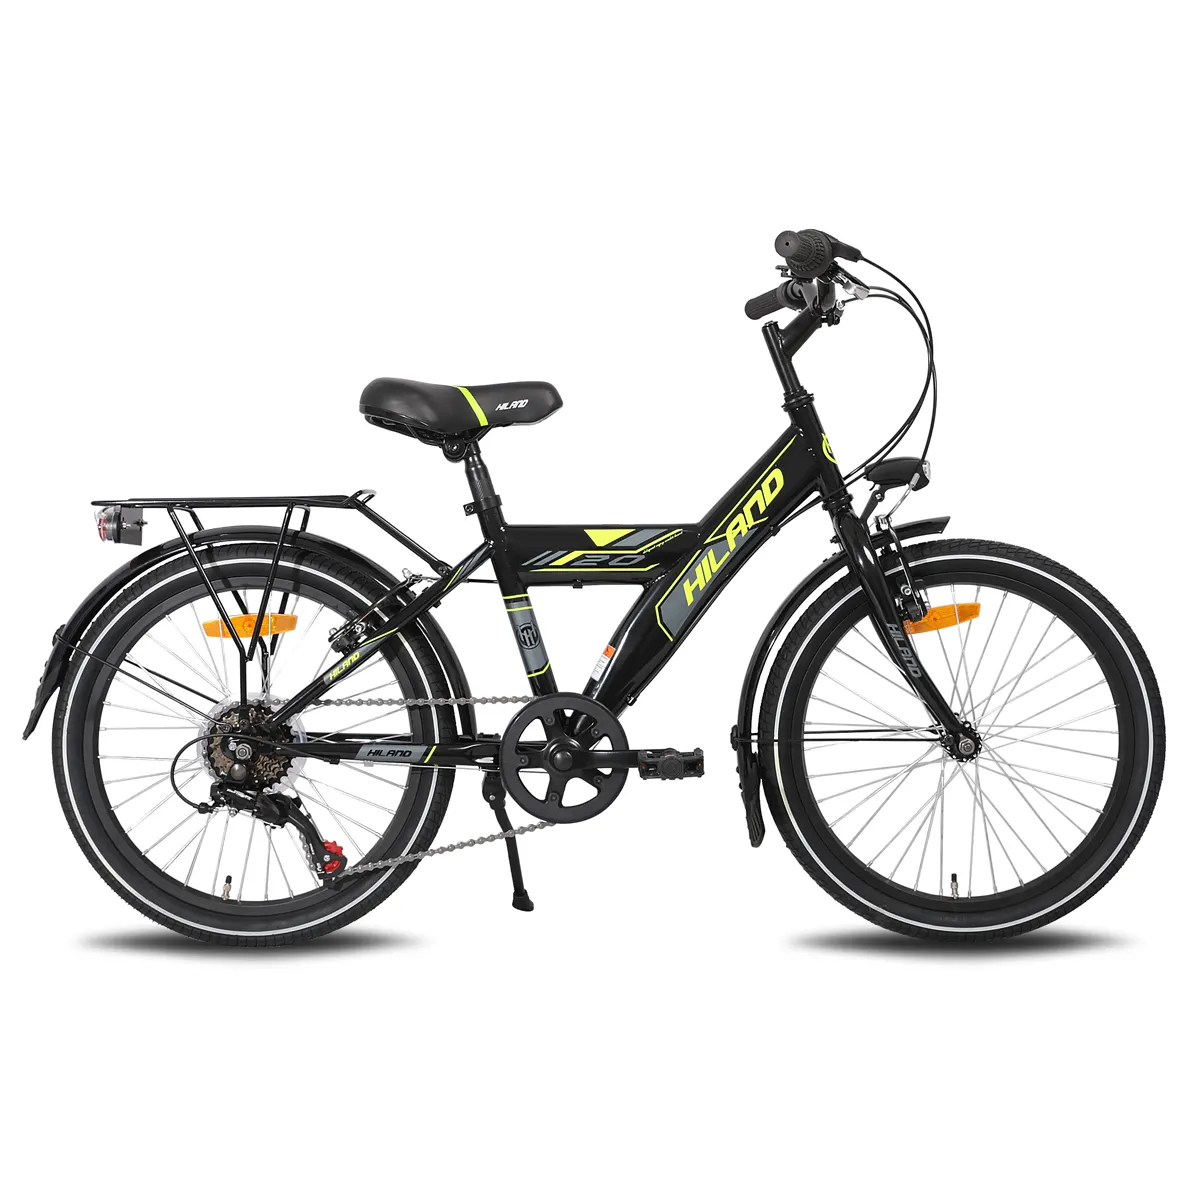 JOYKIEHILANDハードフレーム20インチバイク (5 6 7 89歳からの子供用) スチール製子供用自転車 (子供用)